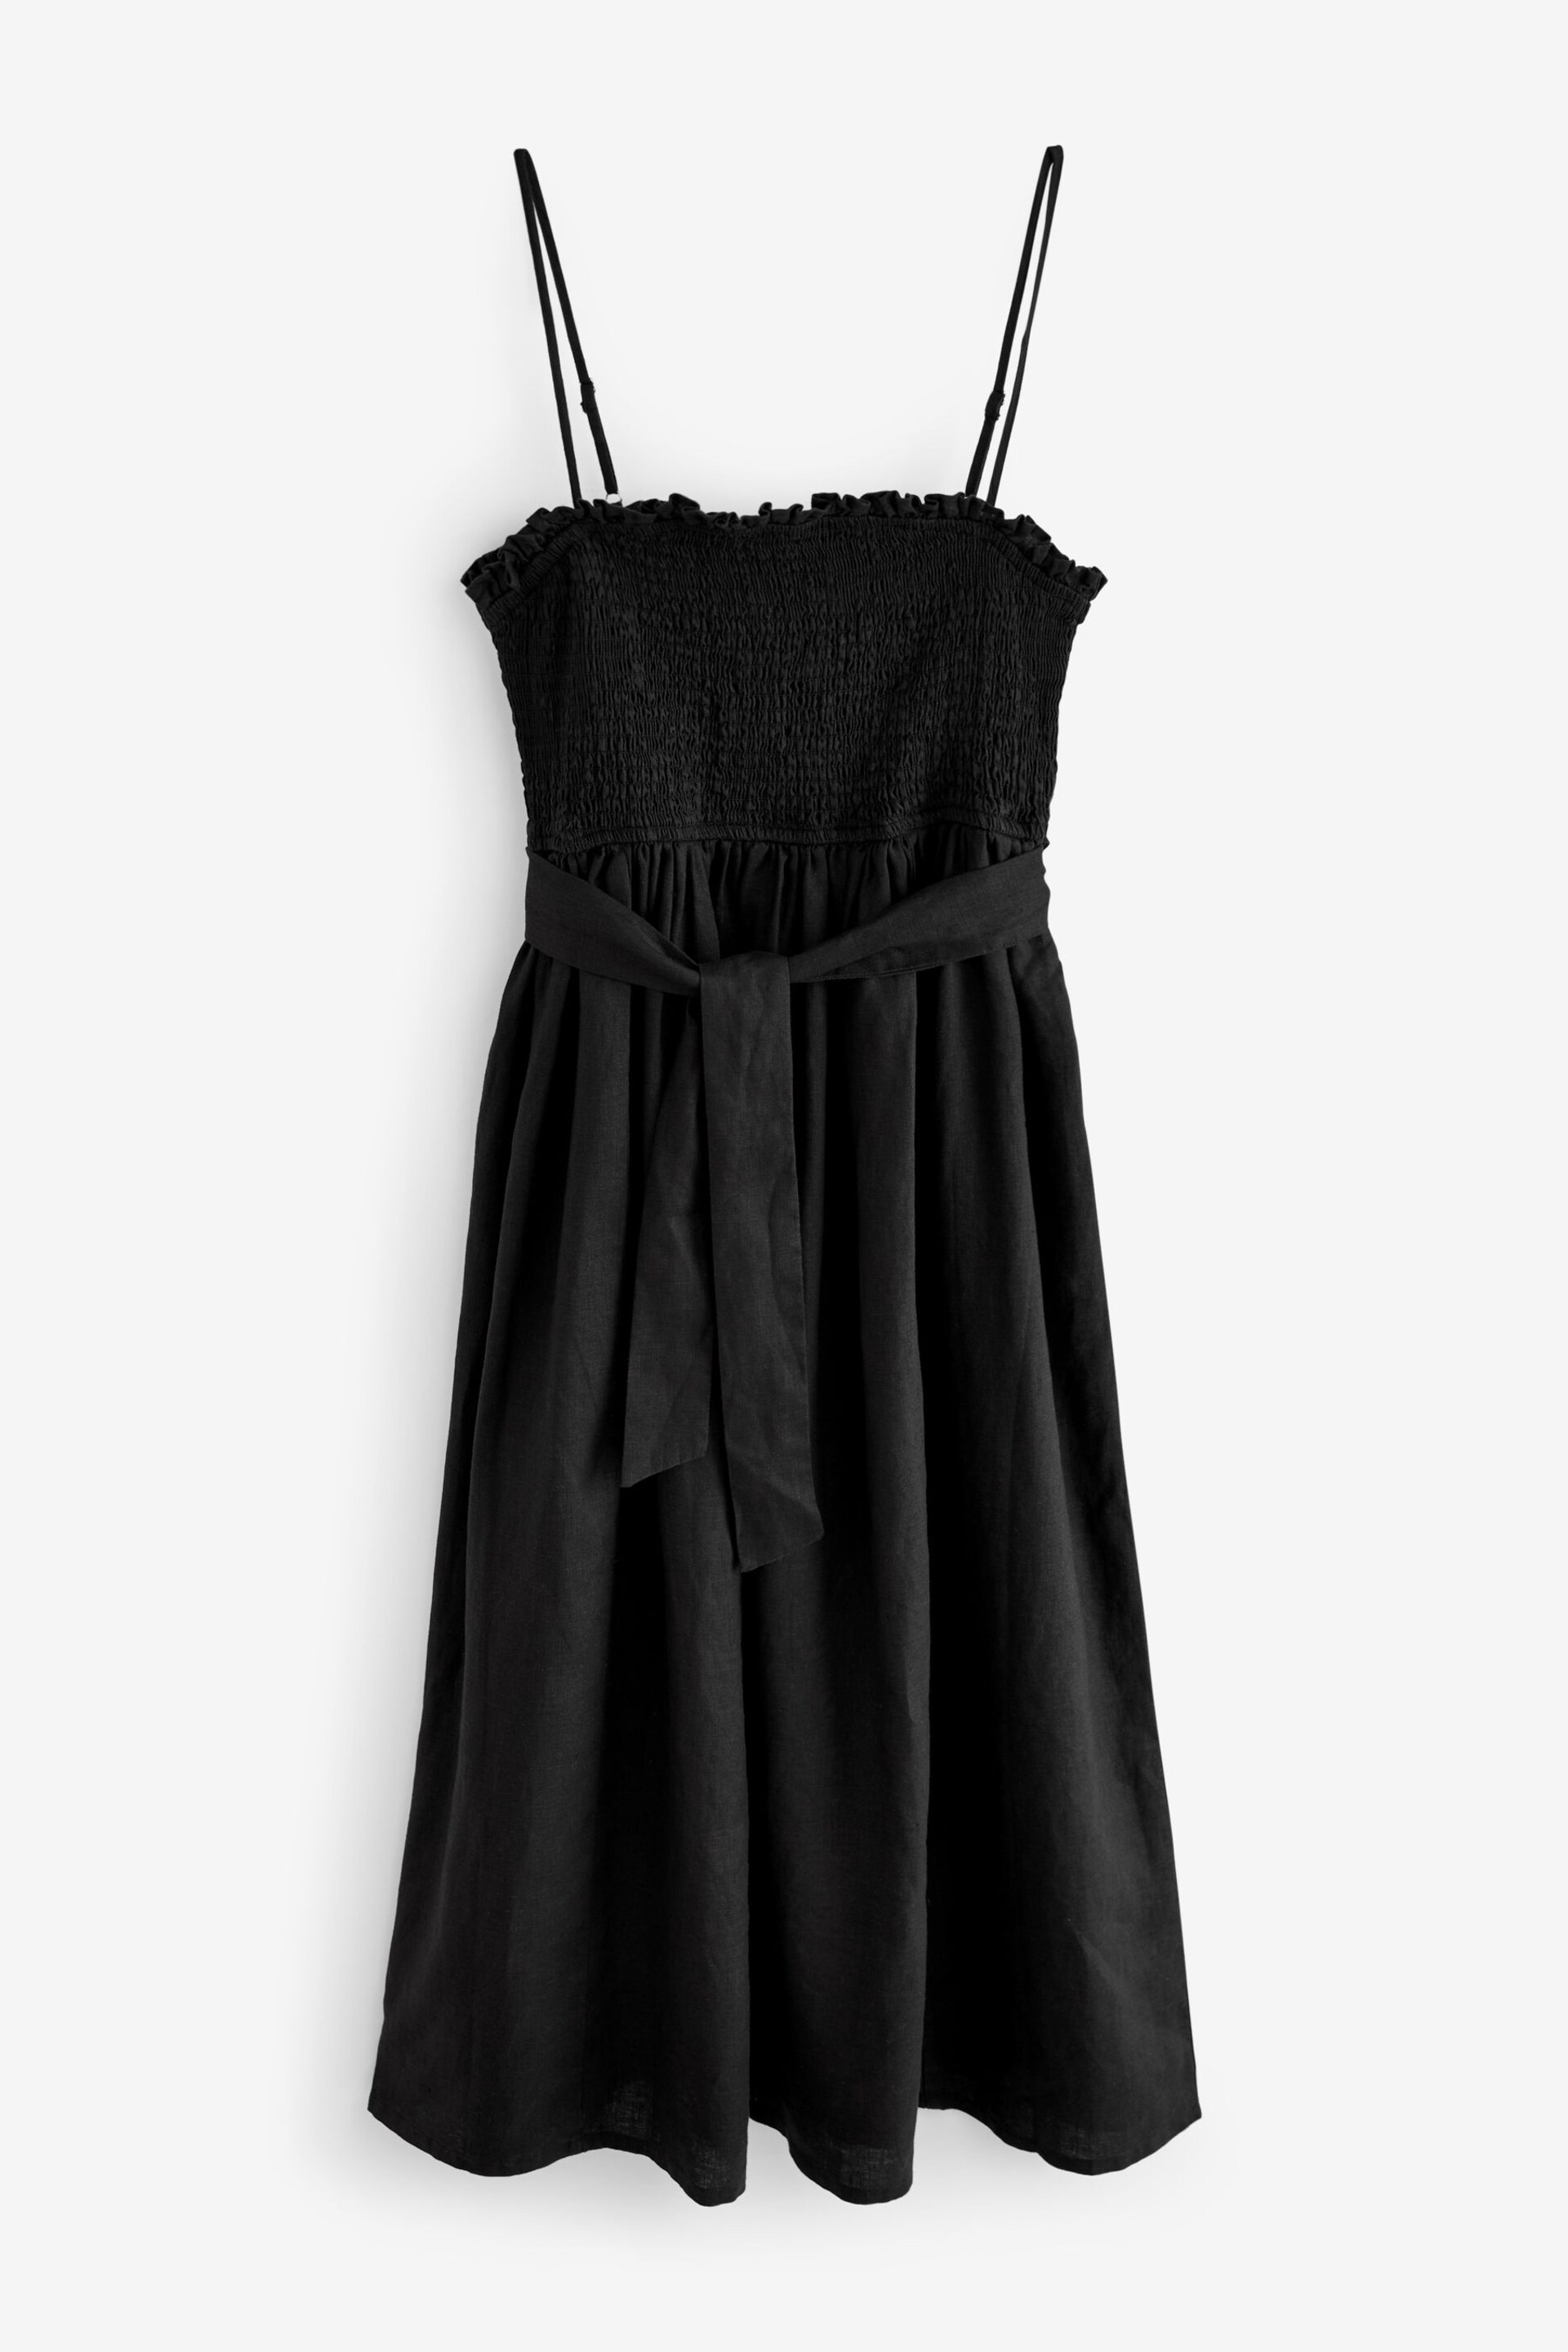 Black Shirred Premium 100% Linen Summer Midi Dress - Image 7 of 7